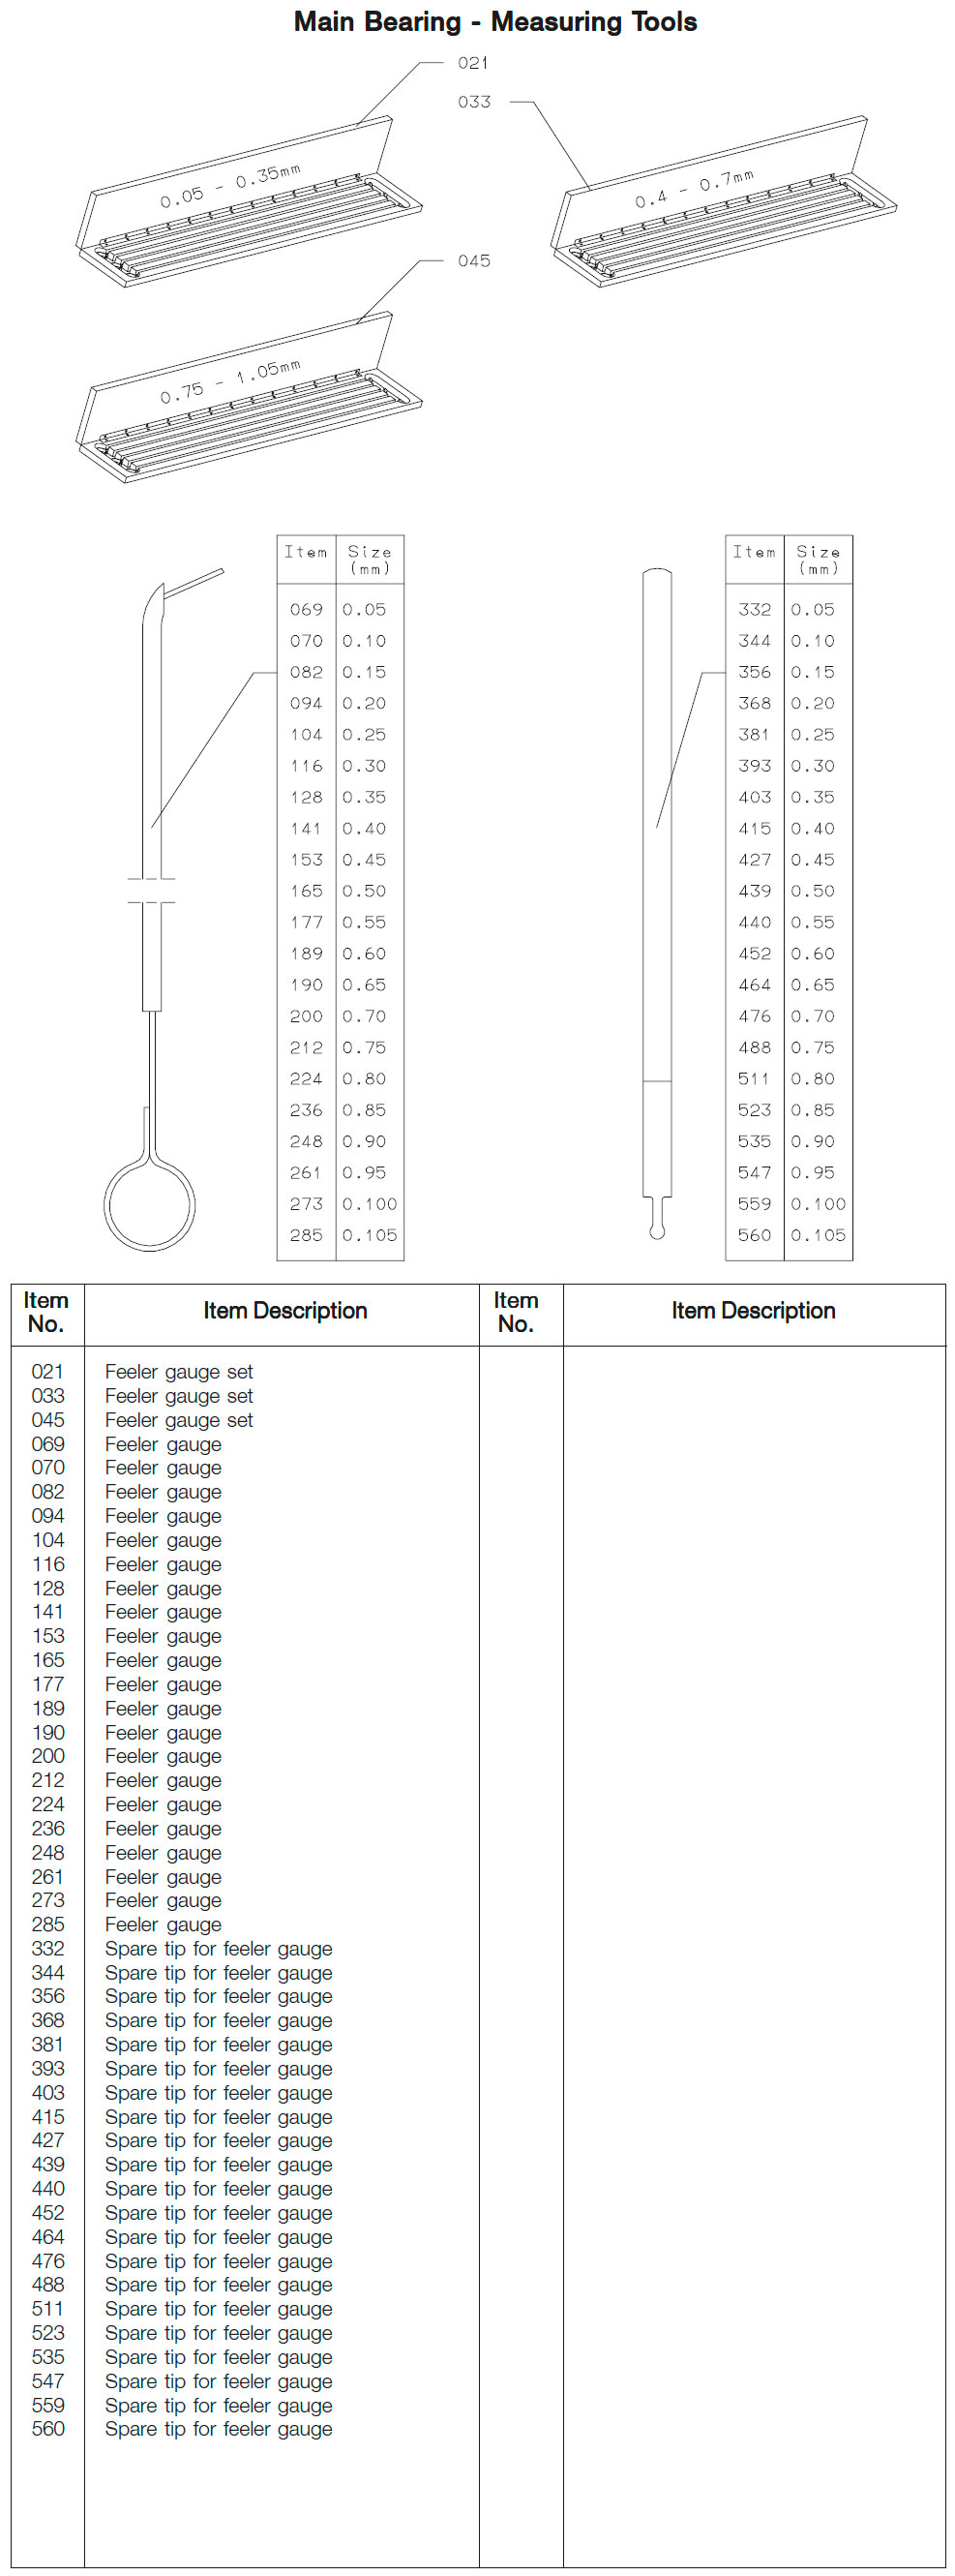 Main Bearing - Measuring Tools